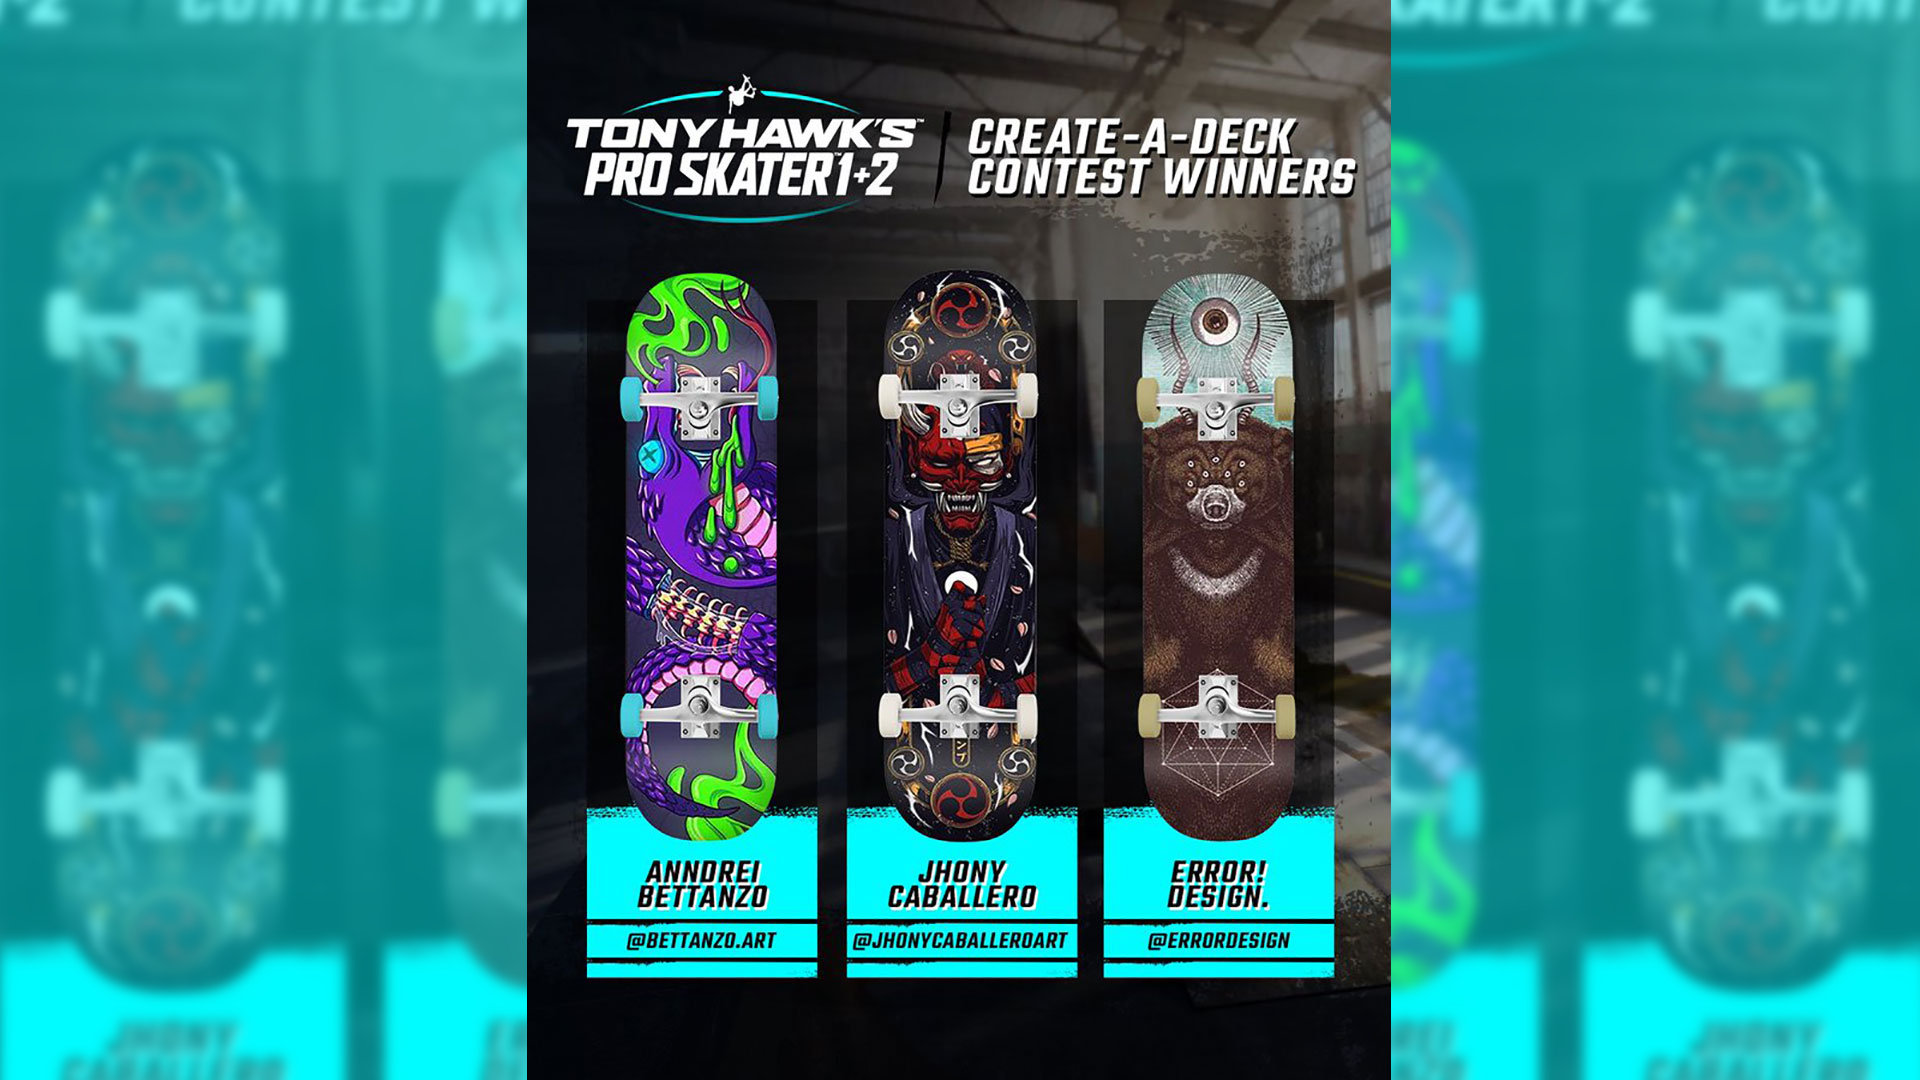 Tony Hawk's Pro Skater 1 + 2 Crash Bandicoot items fan-made decks